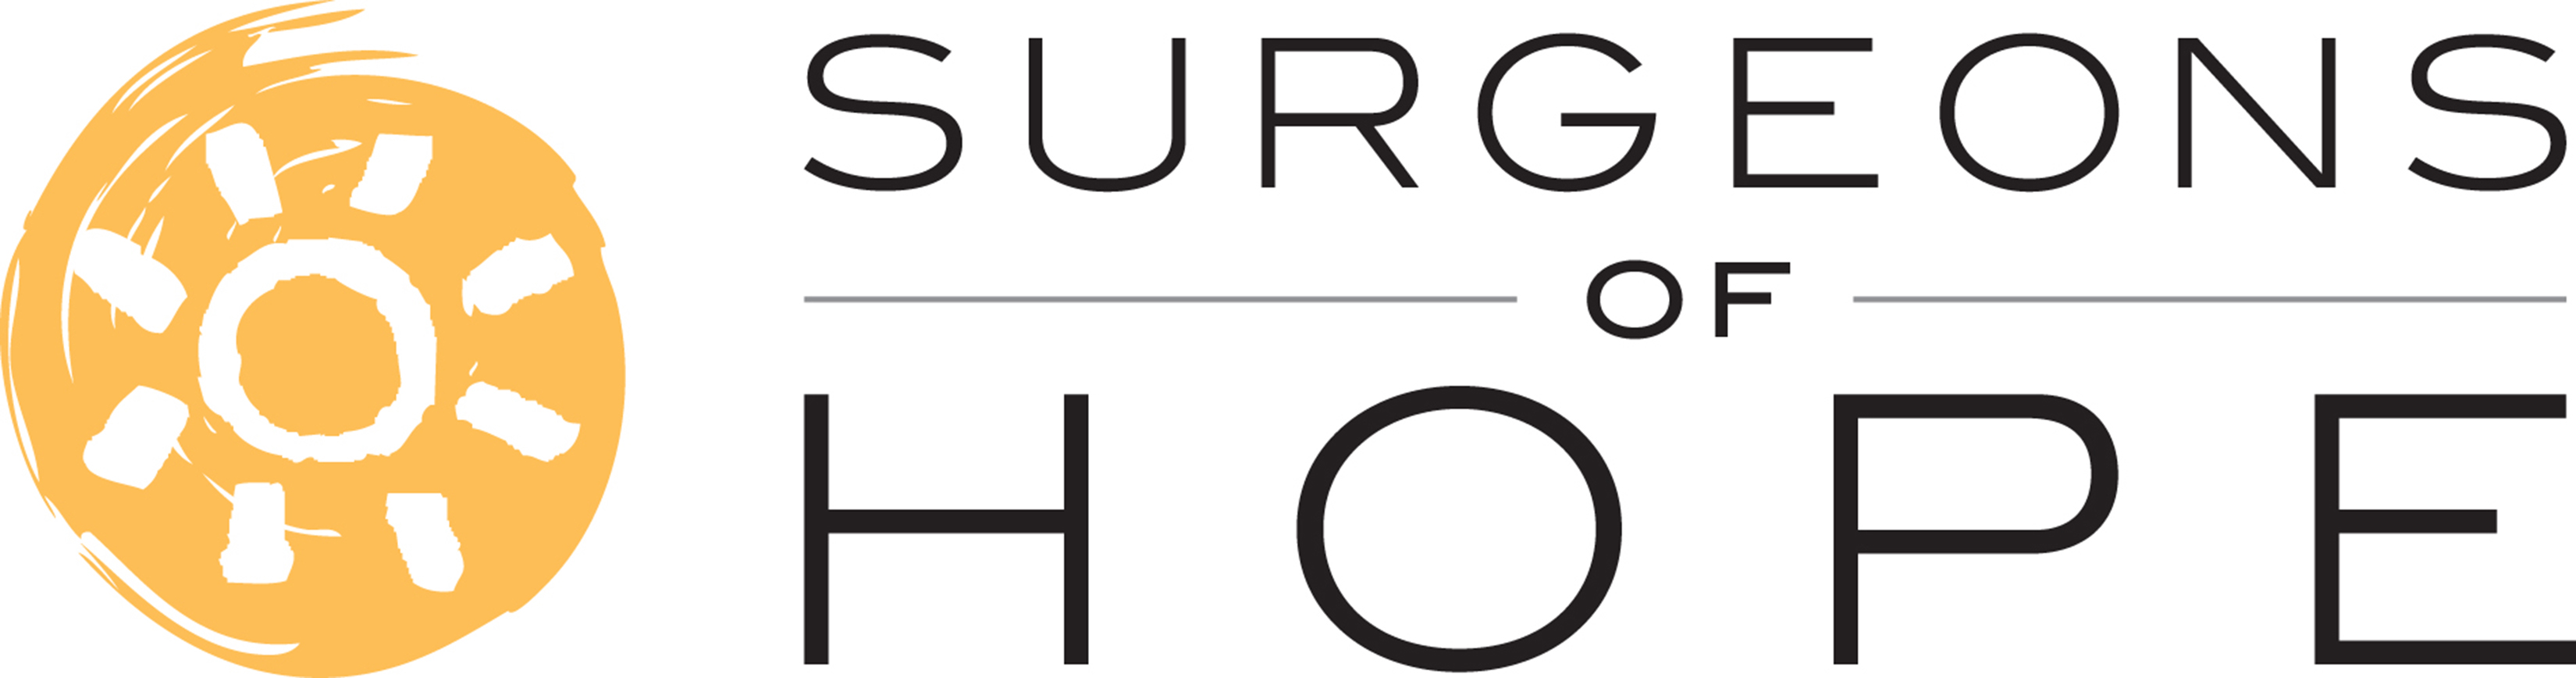 Surgeons of Hope logo